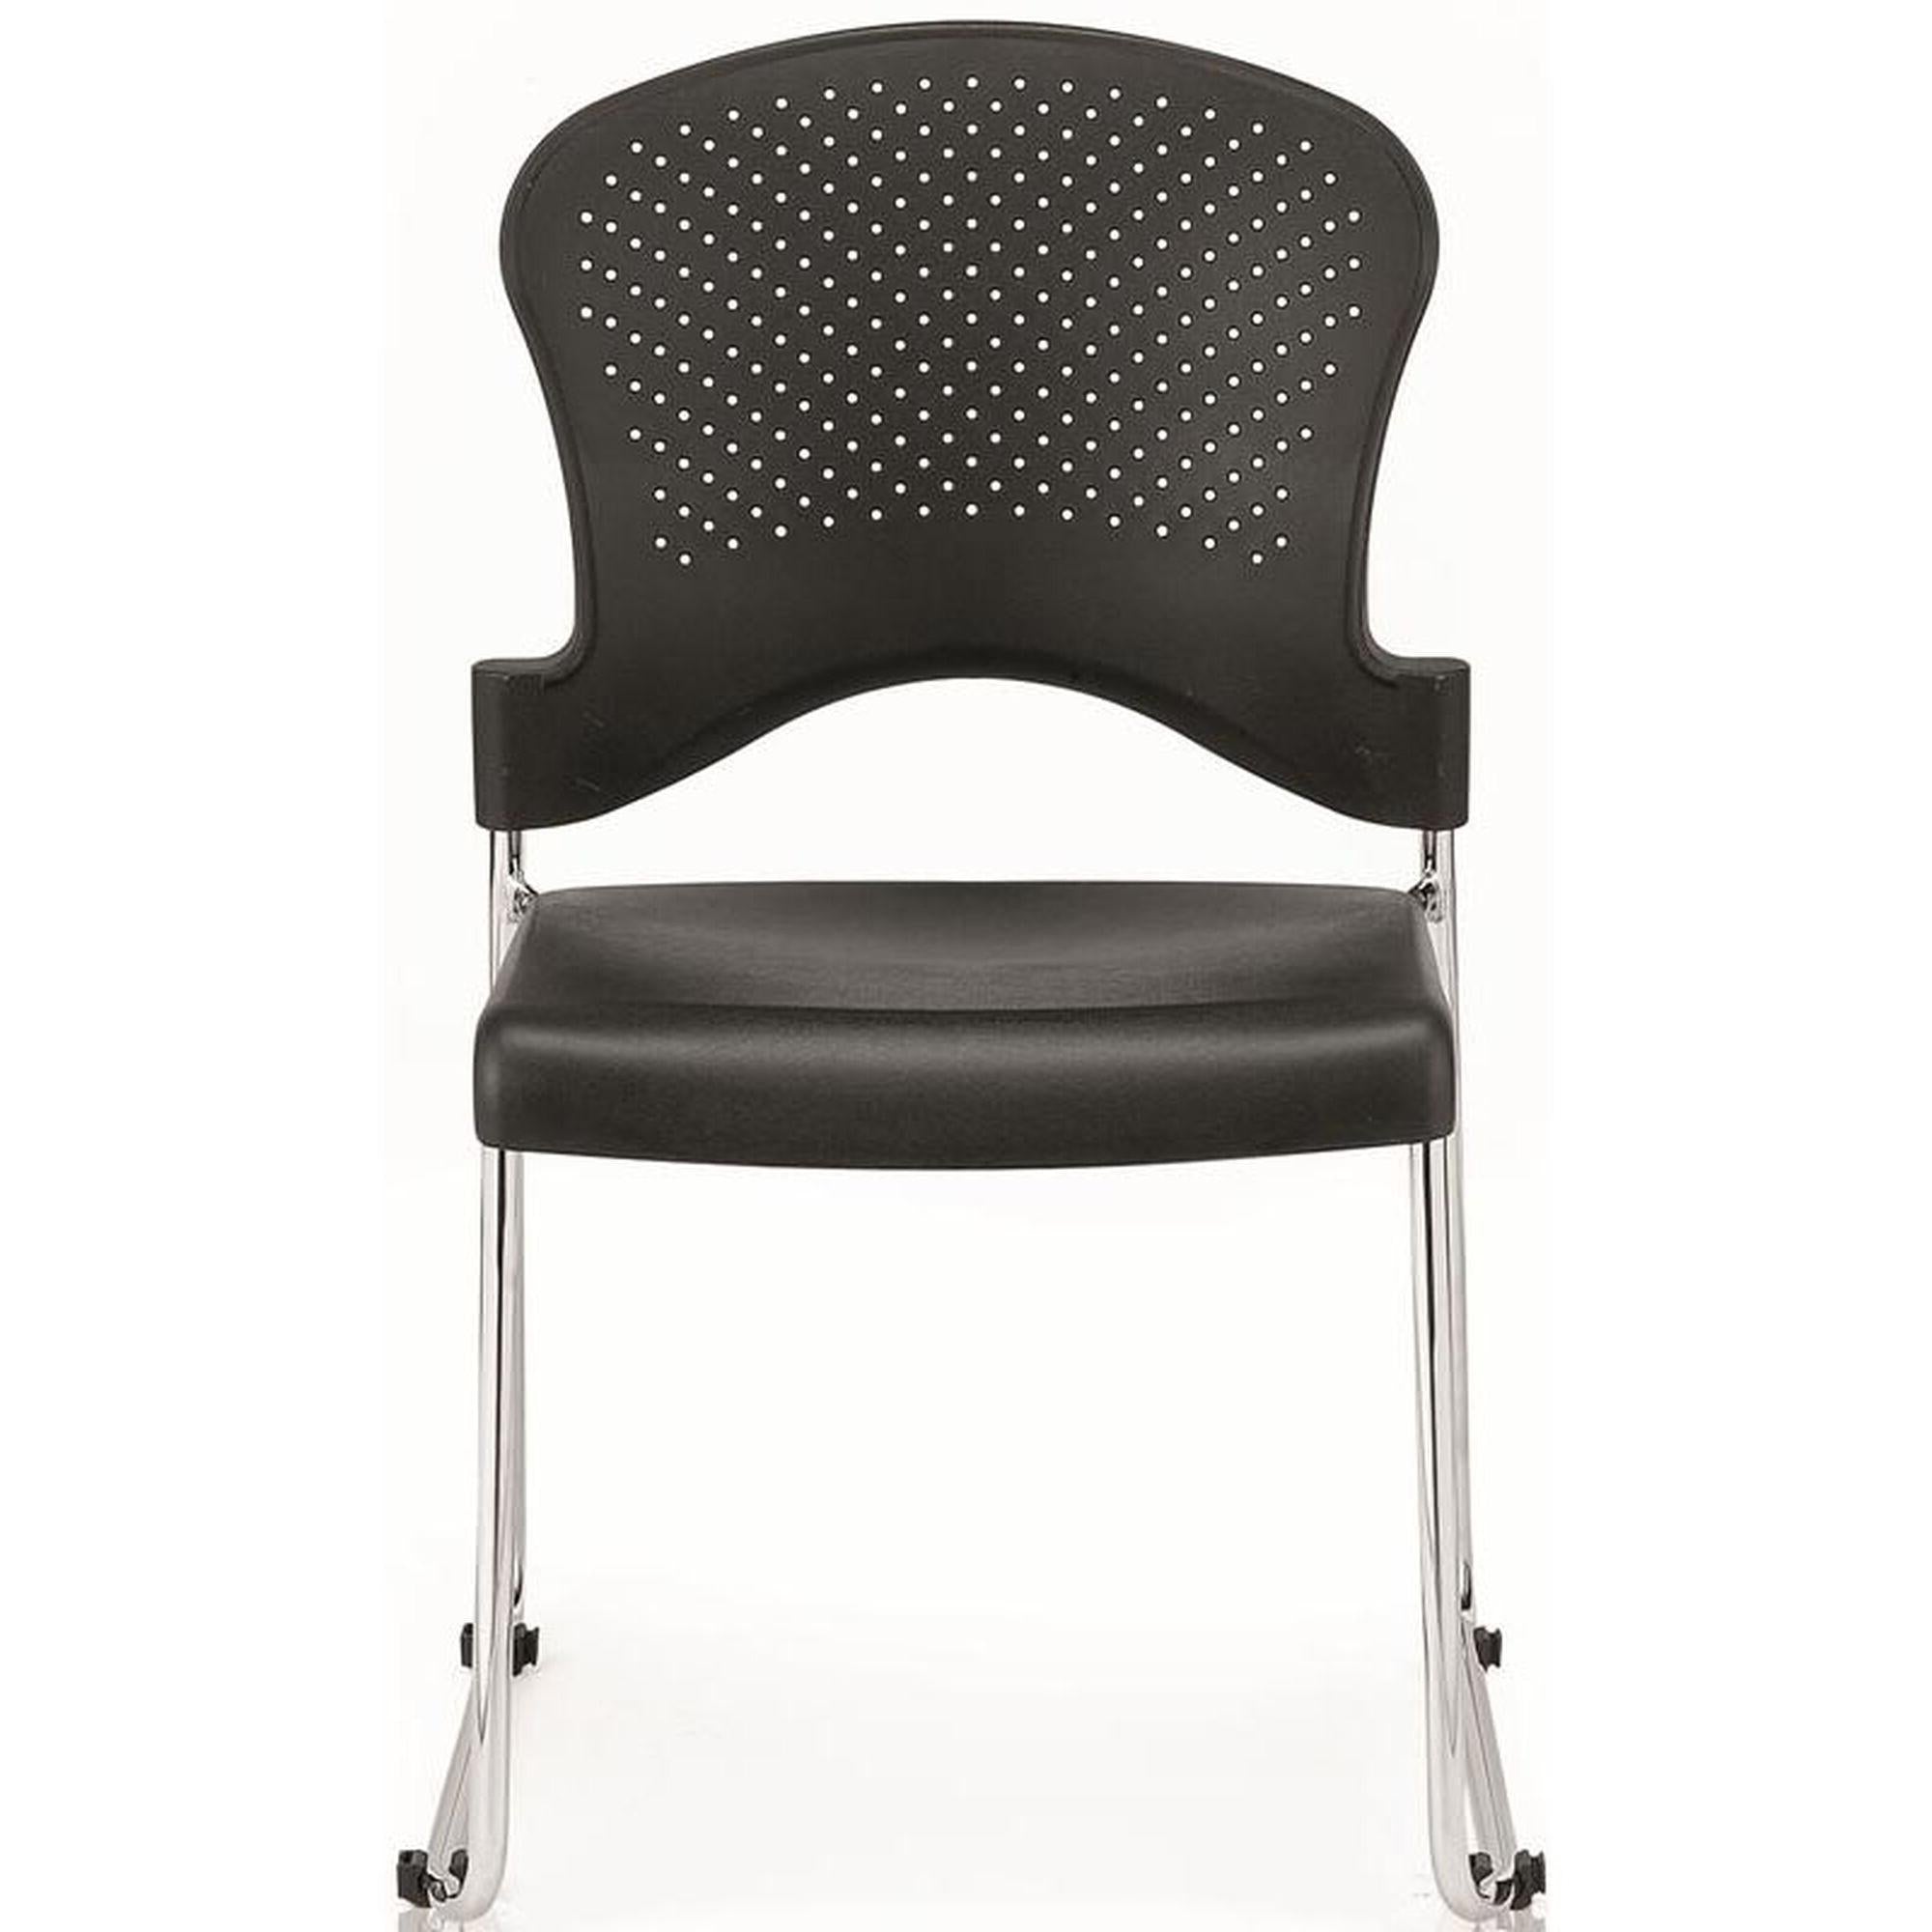 Set of 4 Black Professional Grade Plastic Chairs